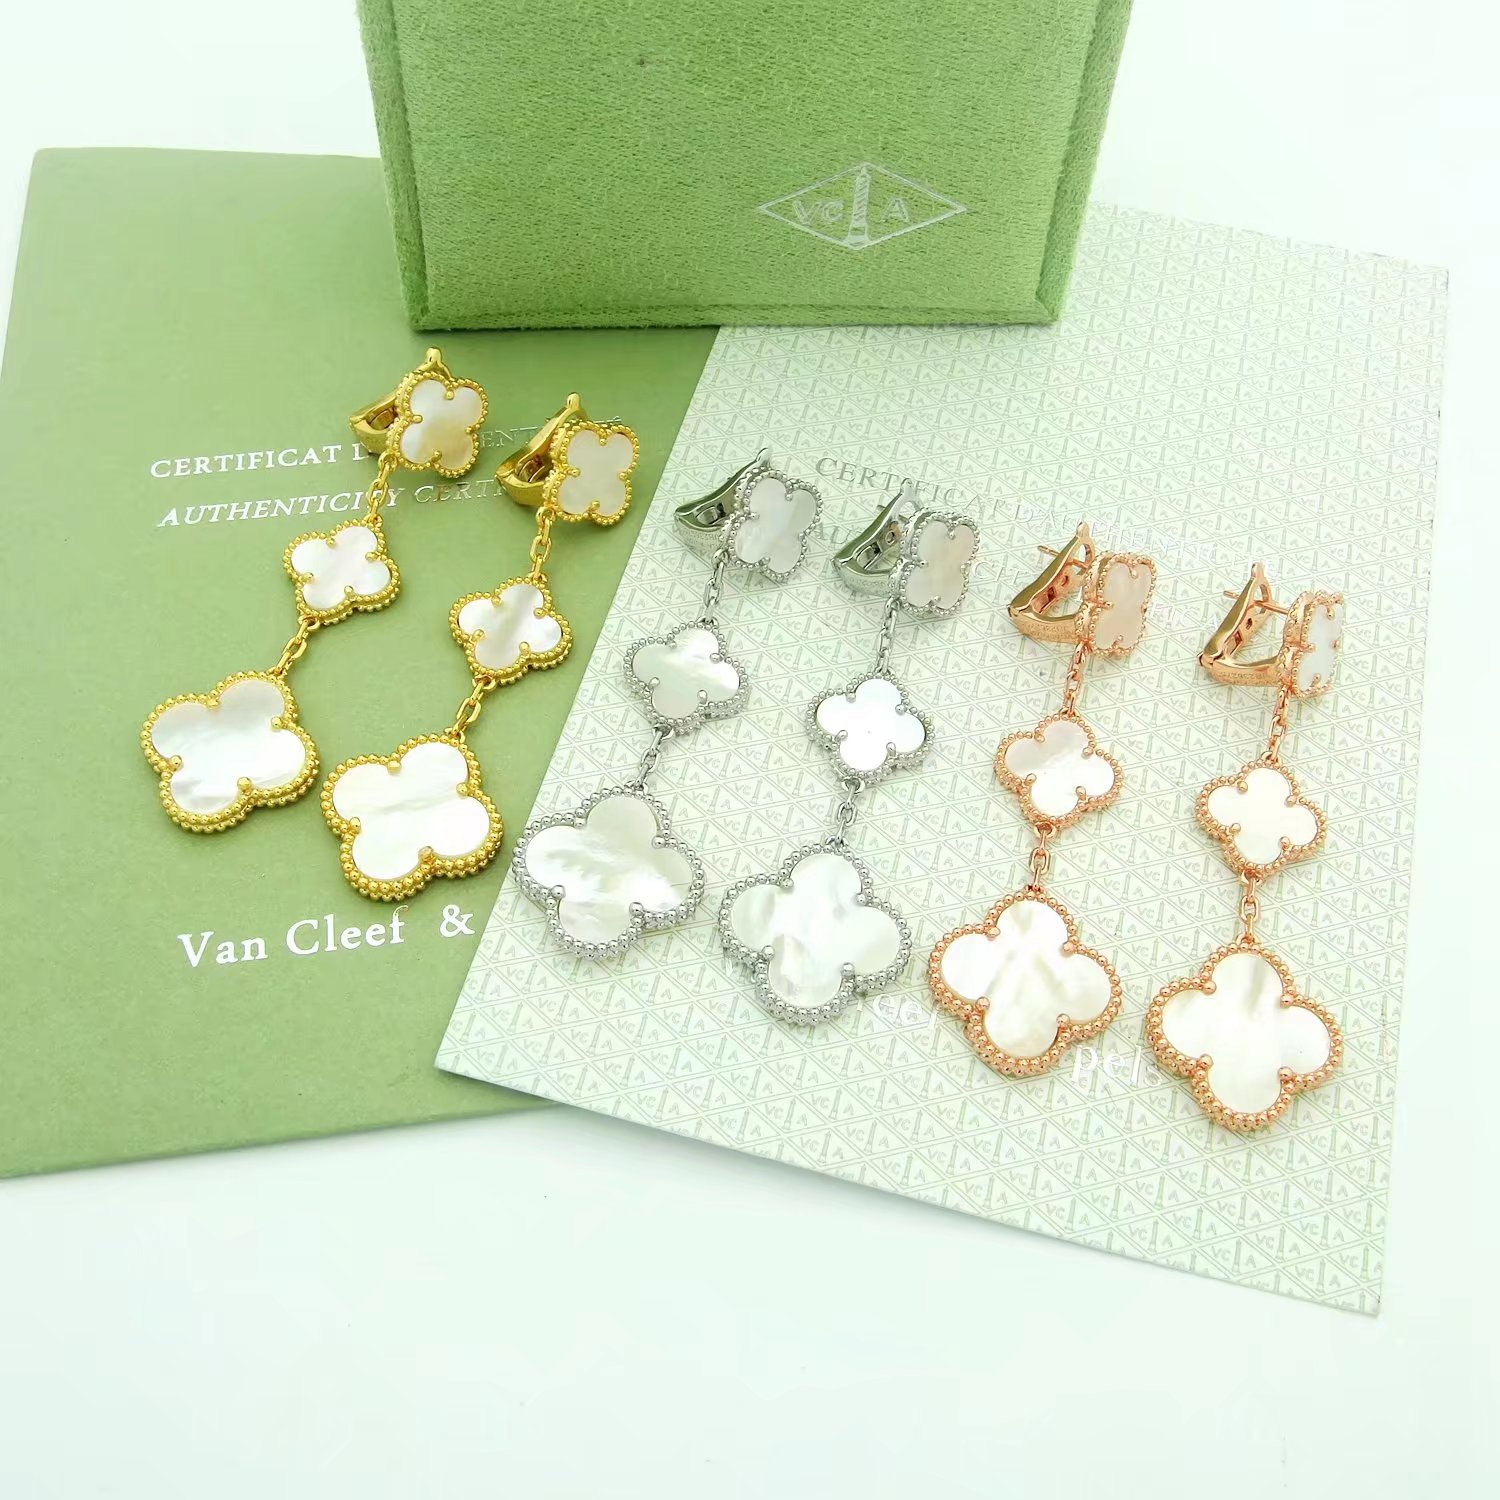 Van Cleef & Arpels Jewelry Earring for sale online
 Set With Diamonds